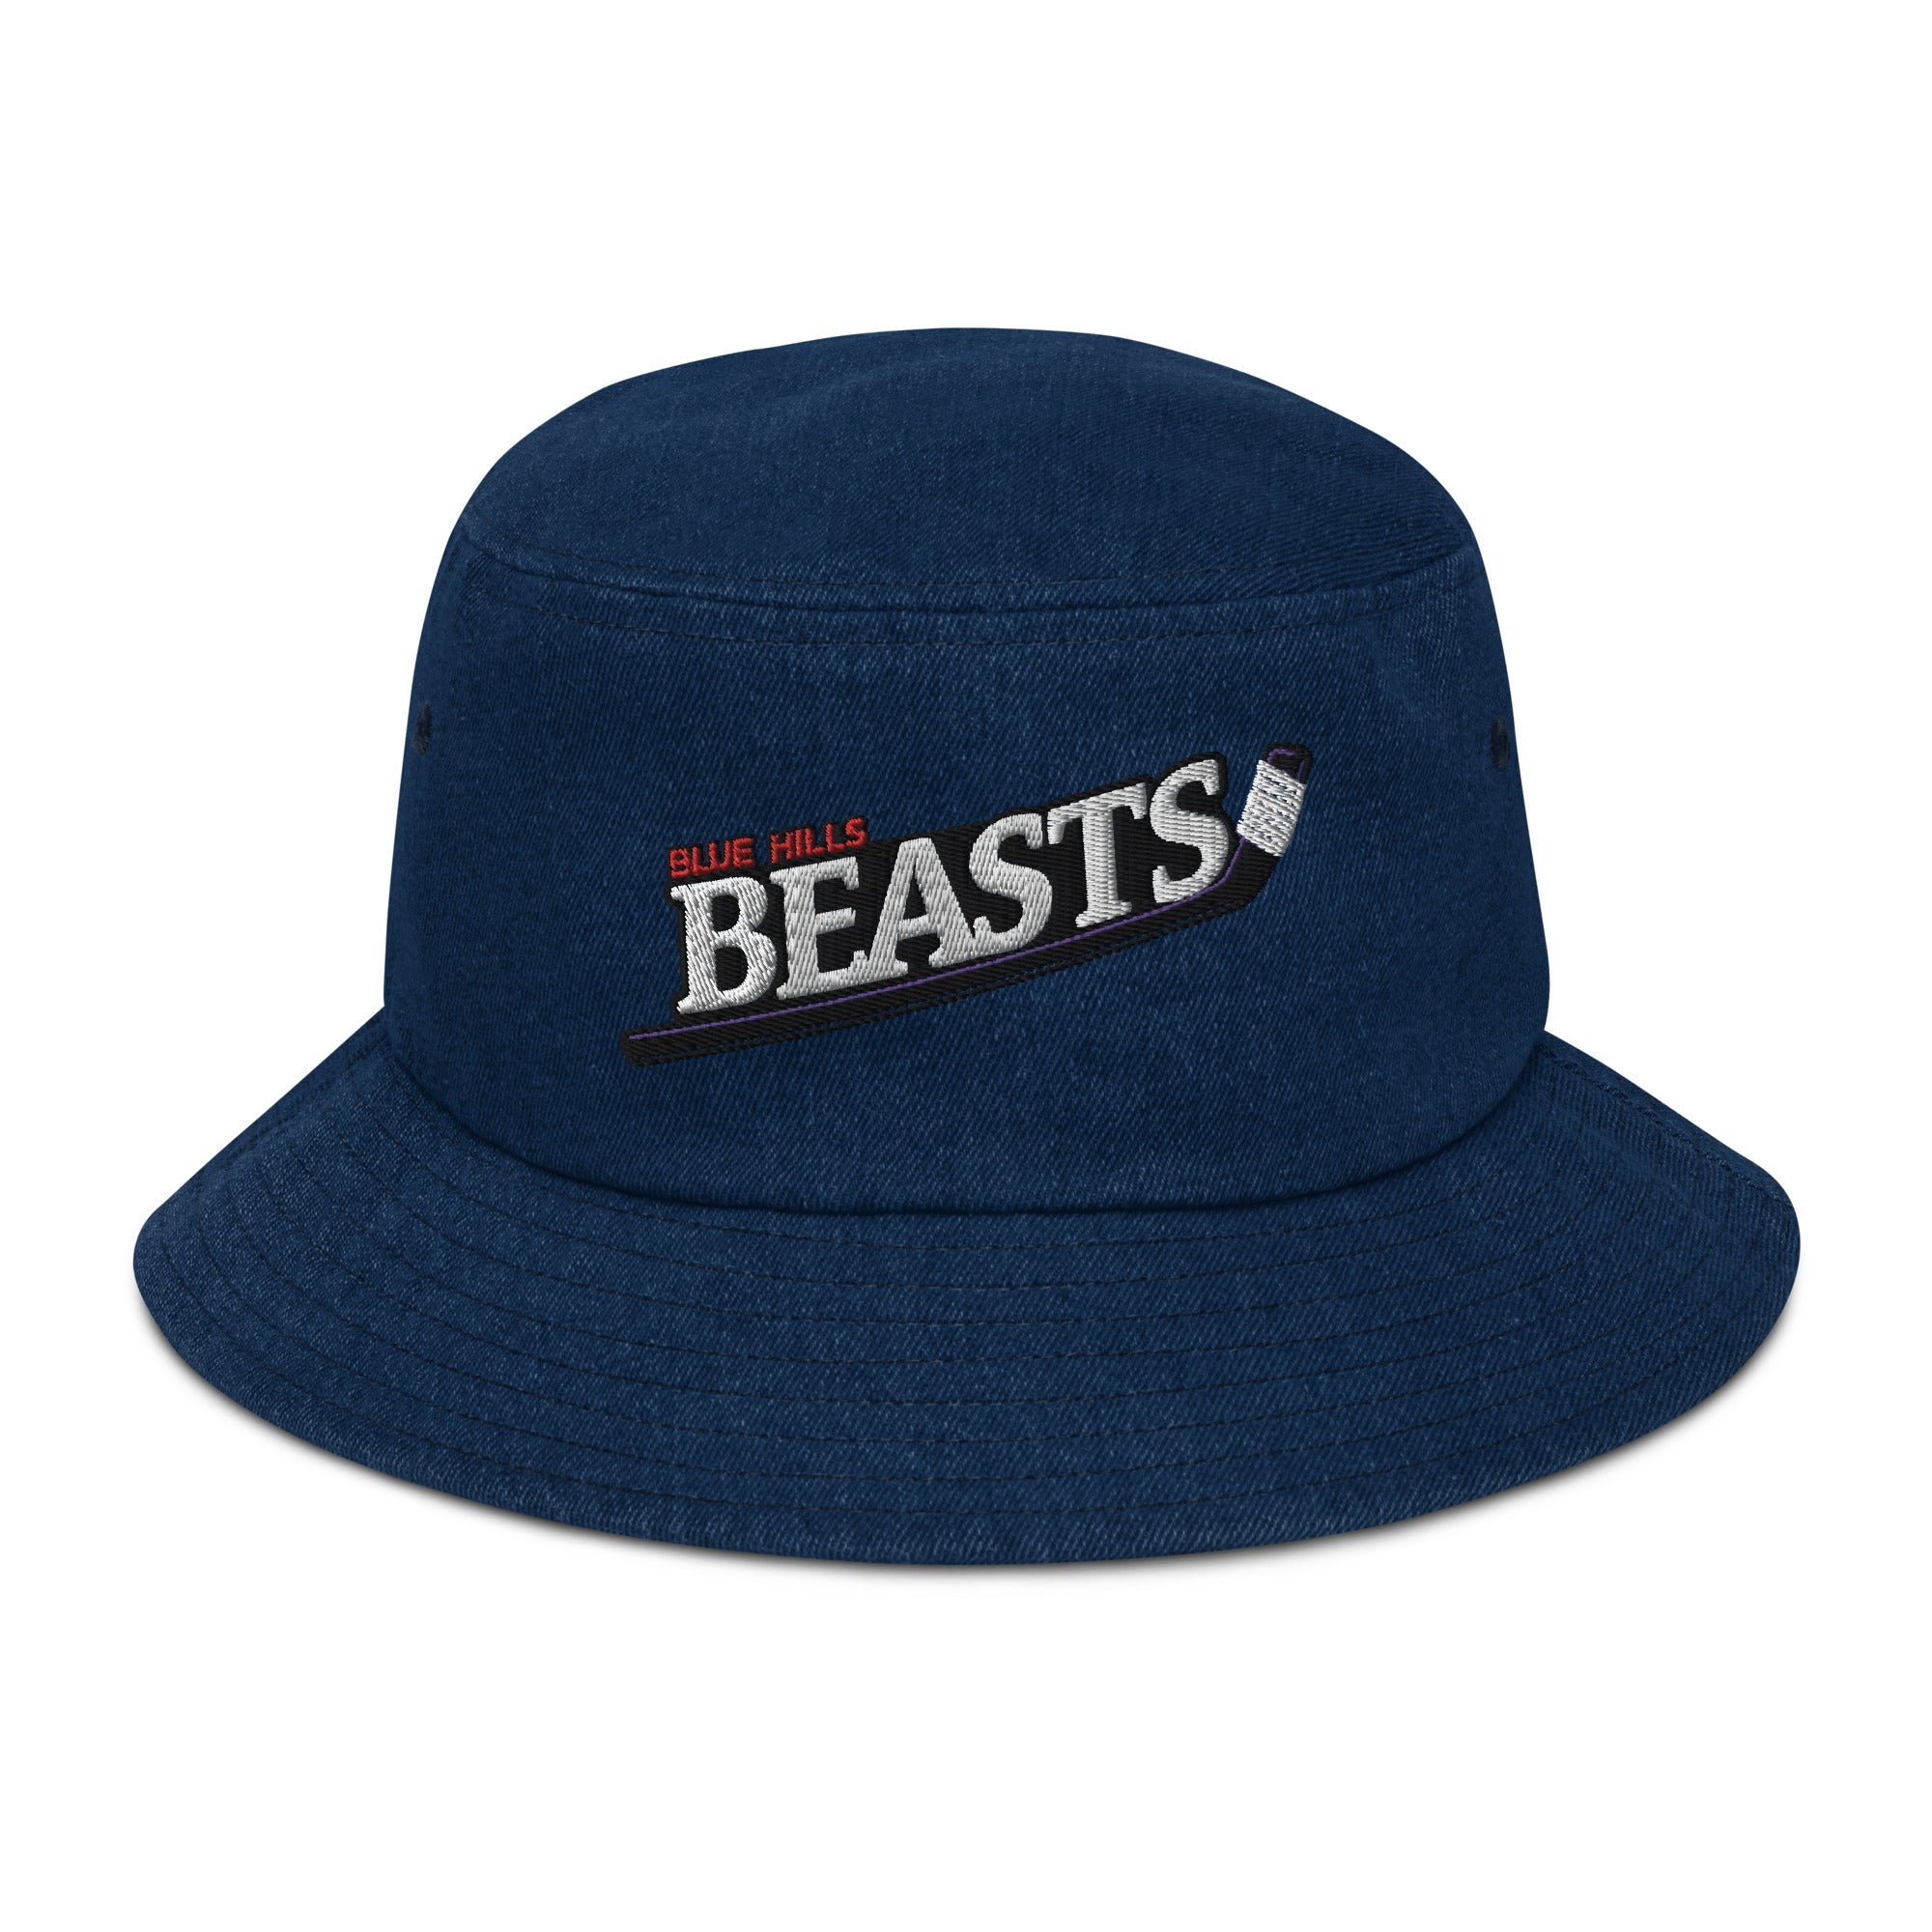 Blue Hills Beasts Denim bucket hat